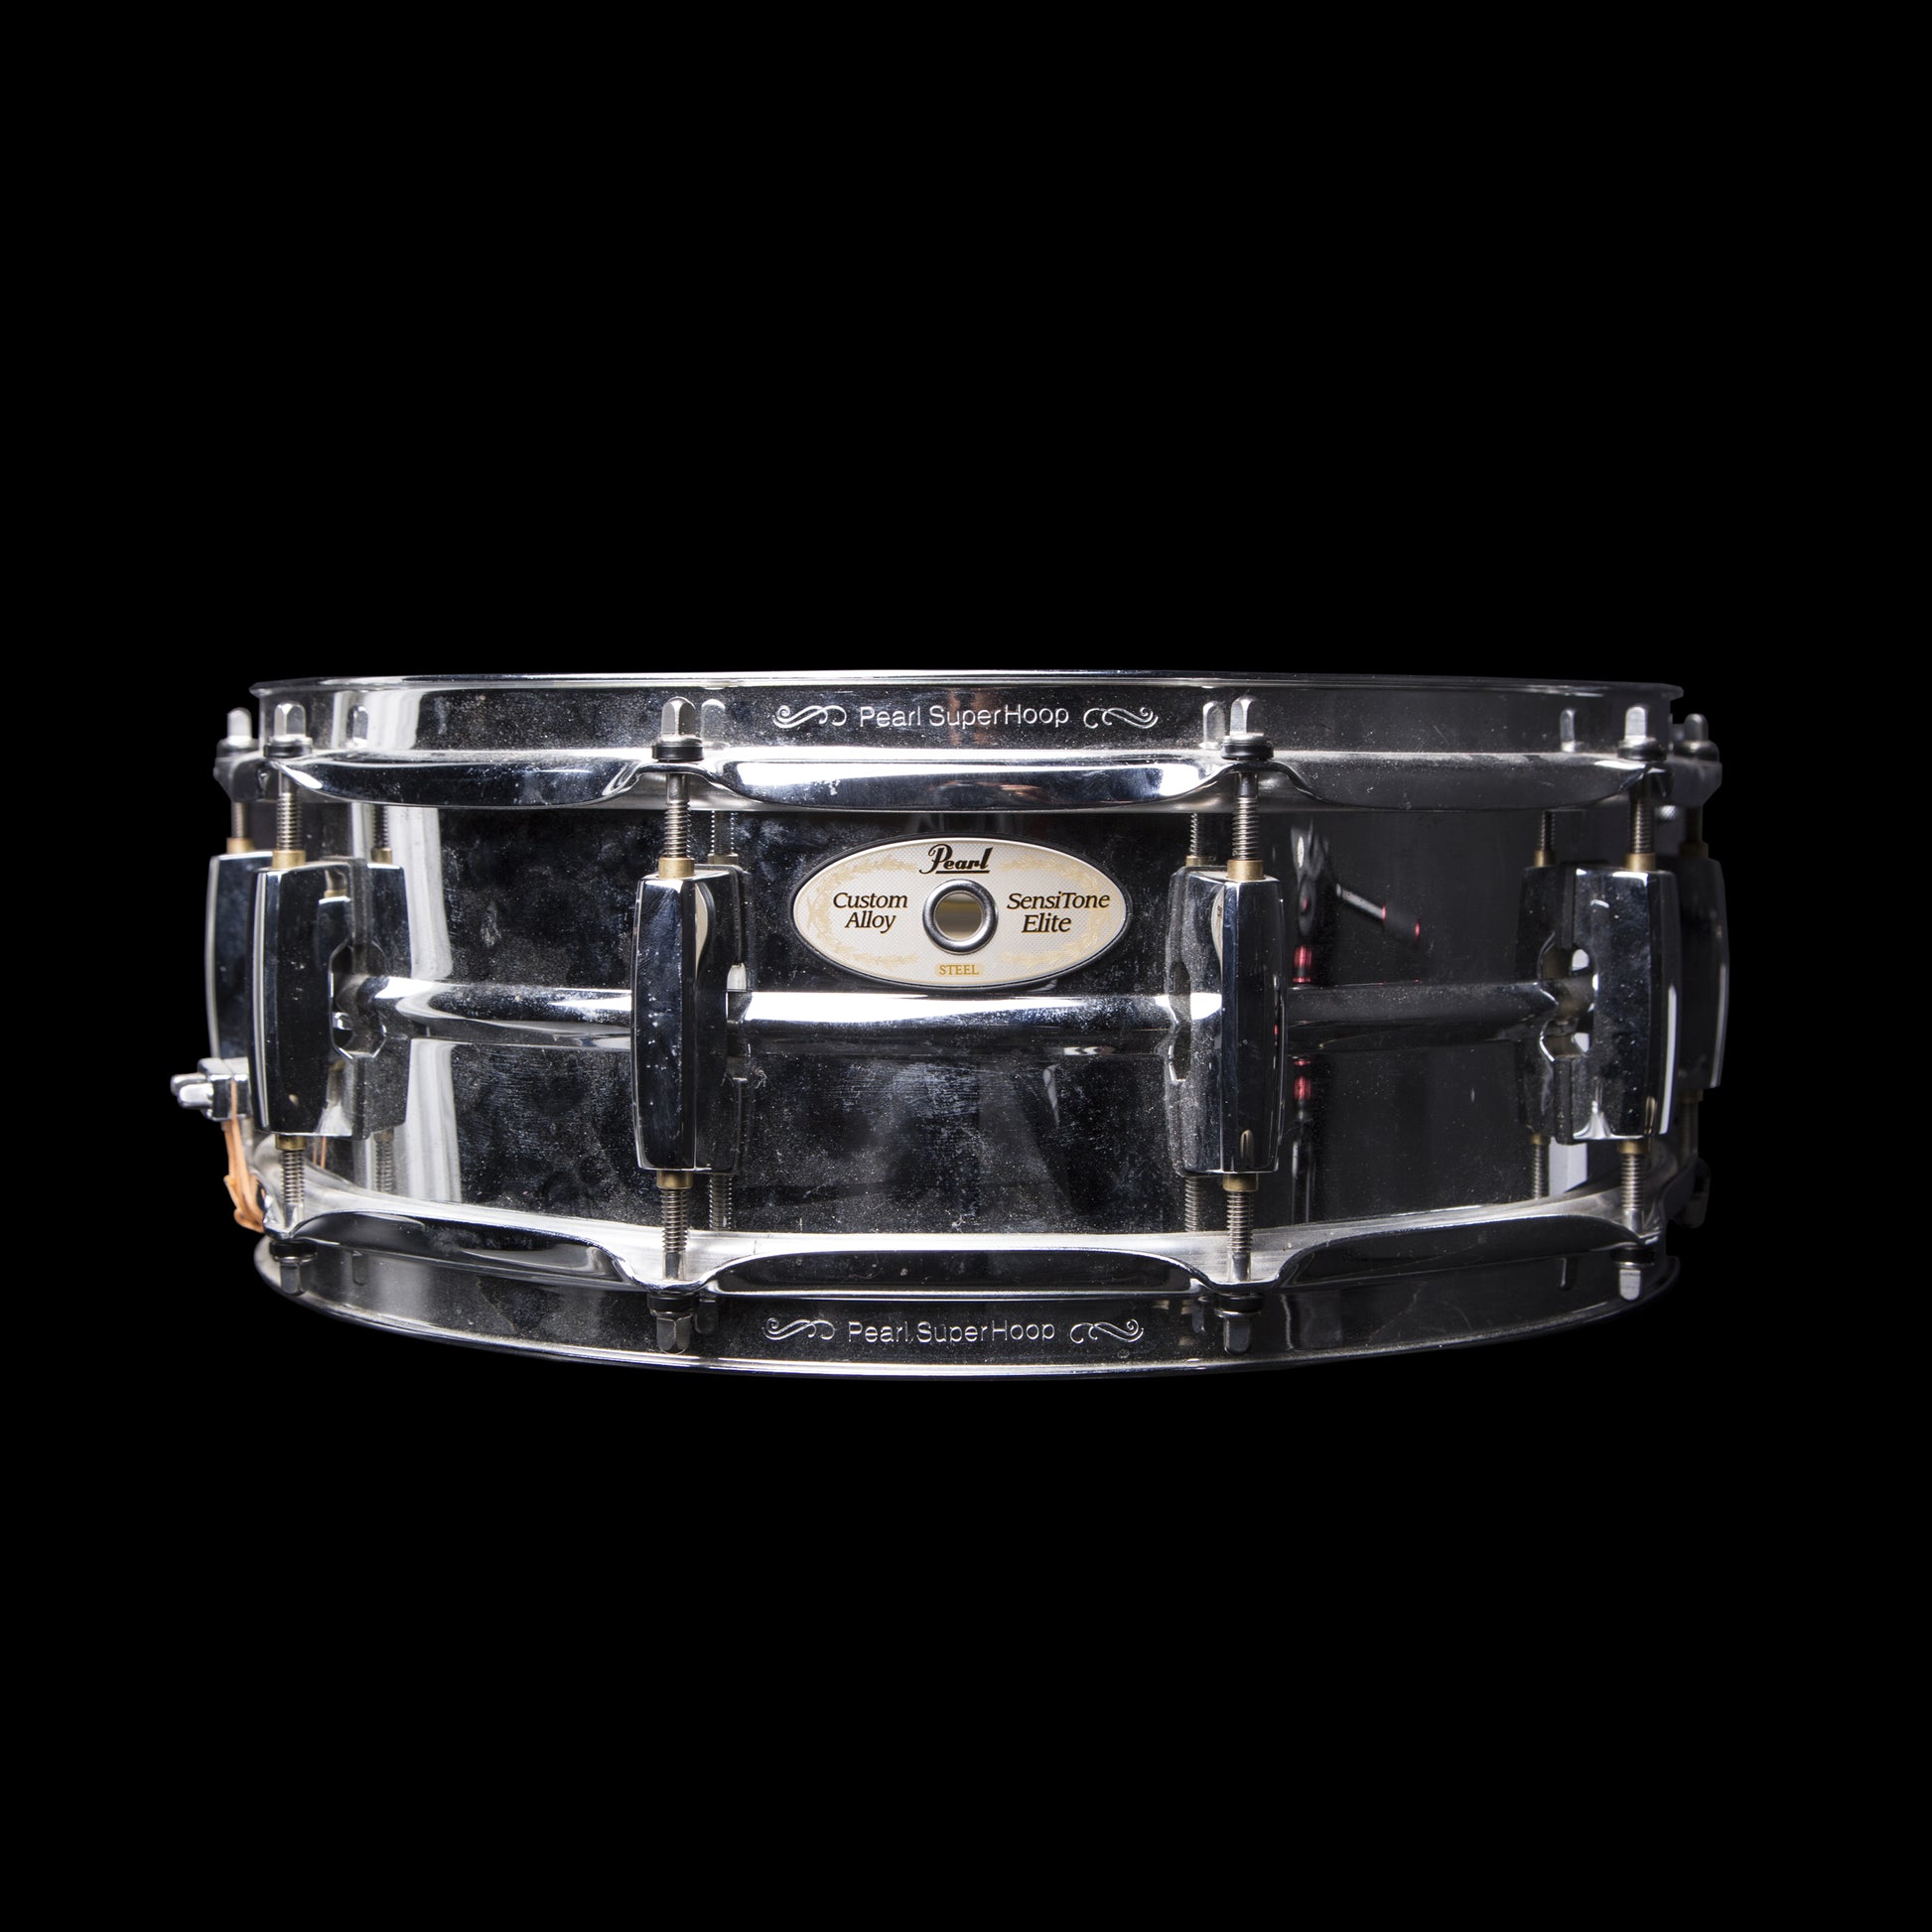 Pearl Sensitone Elite Beaded Brass Snare Drum 5x14 